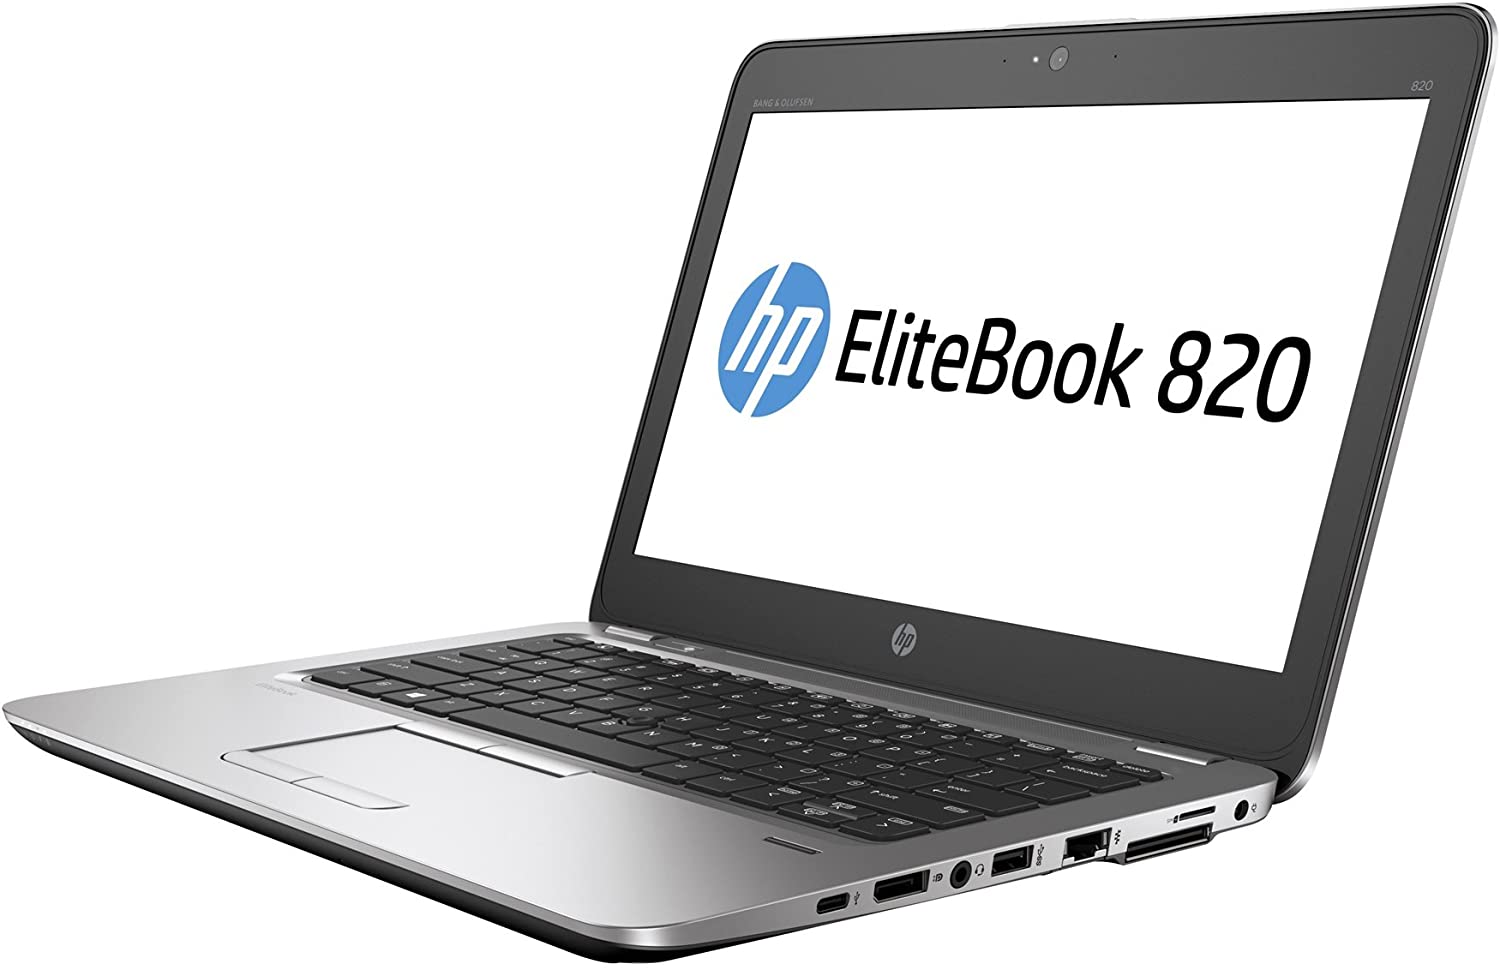 HP EliteBook 820 G3 12.5" Laptop, Intel Core i7, 8GB RAM, 256GB SSD, Win10 Pro. Refurbished